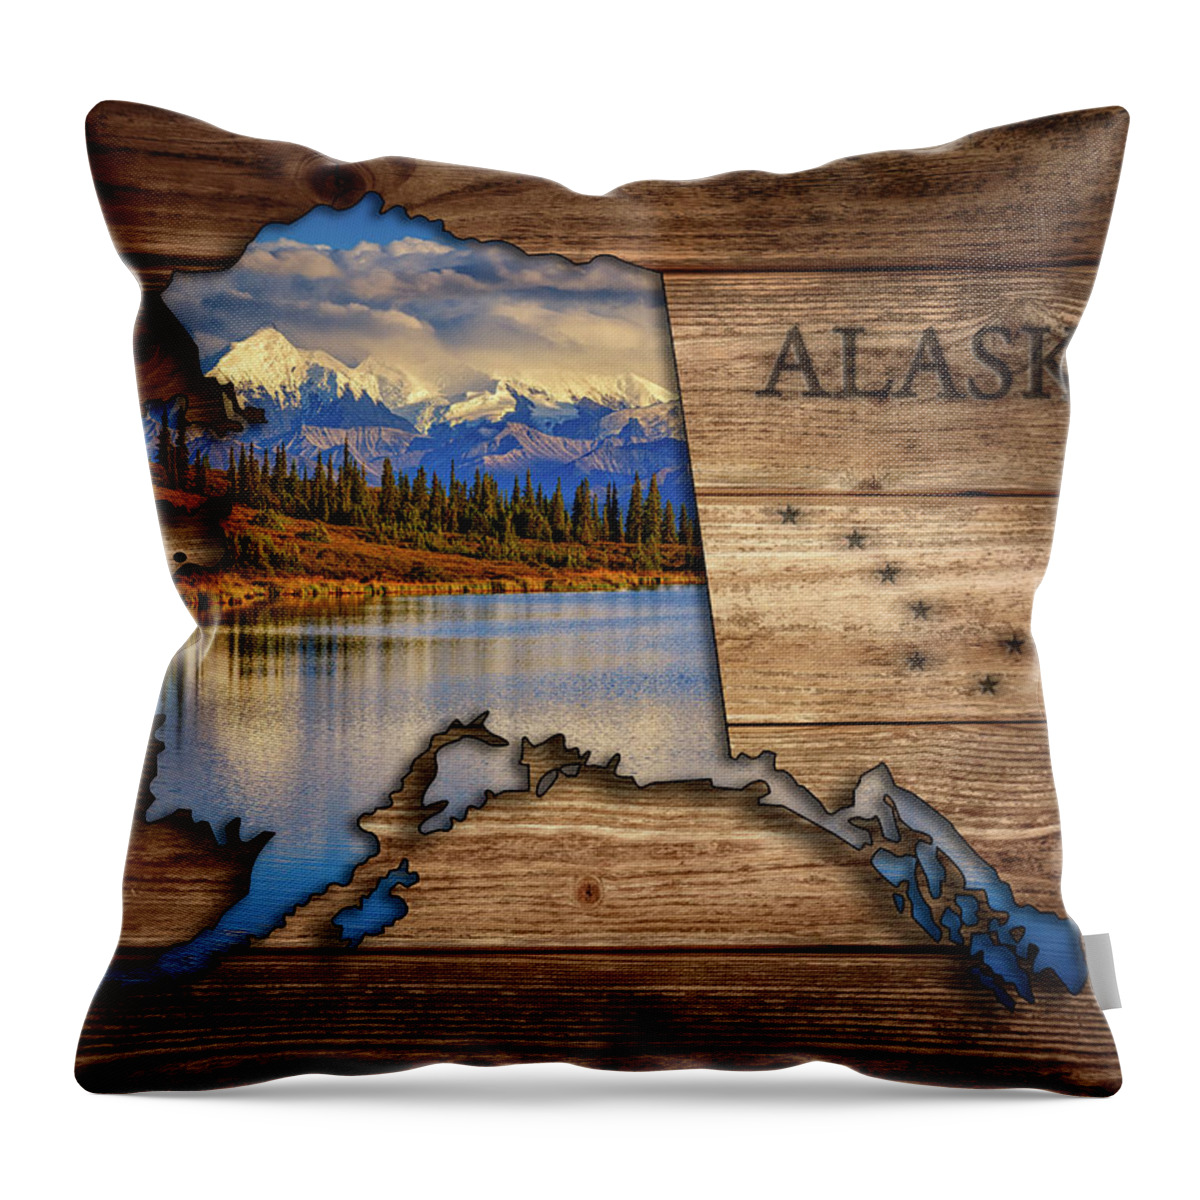 Alaska Throw Pillow featuring the photograph Alaska Map Collage by Rick Berk